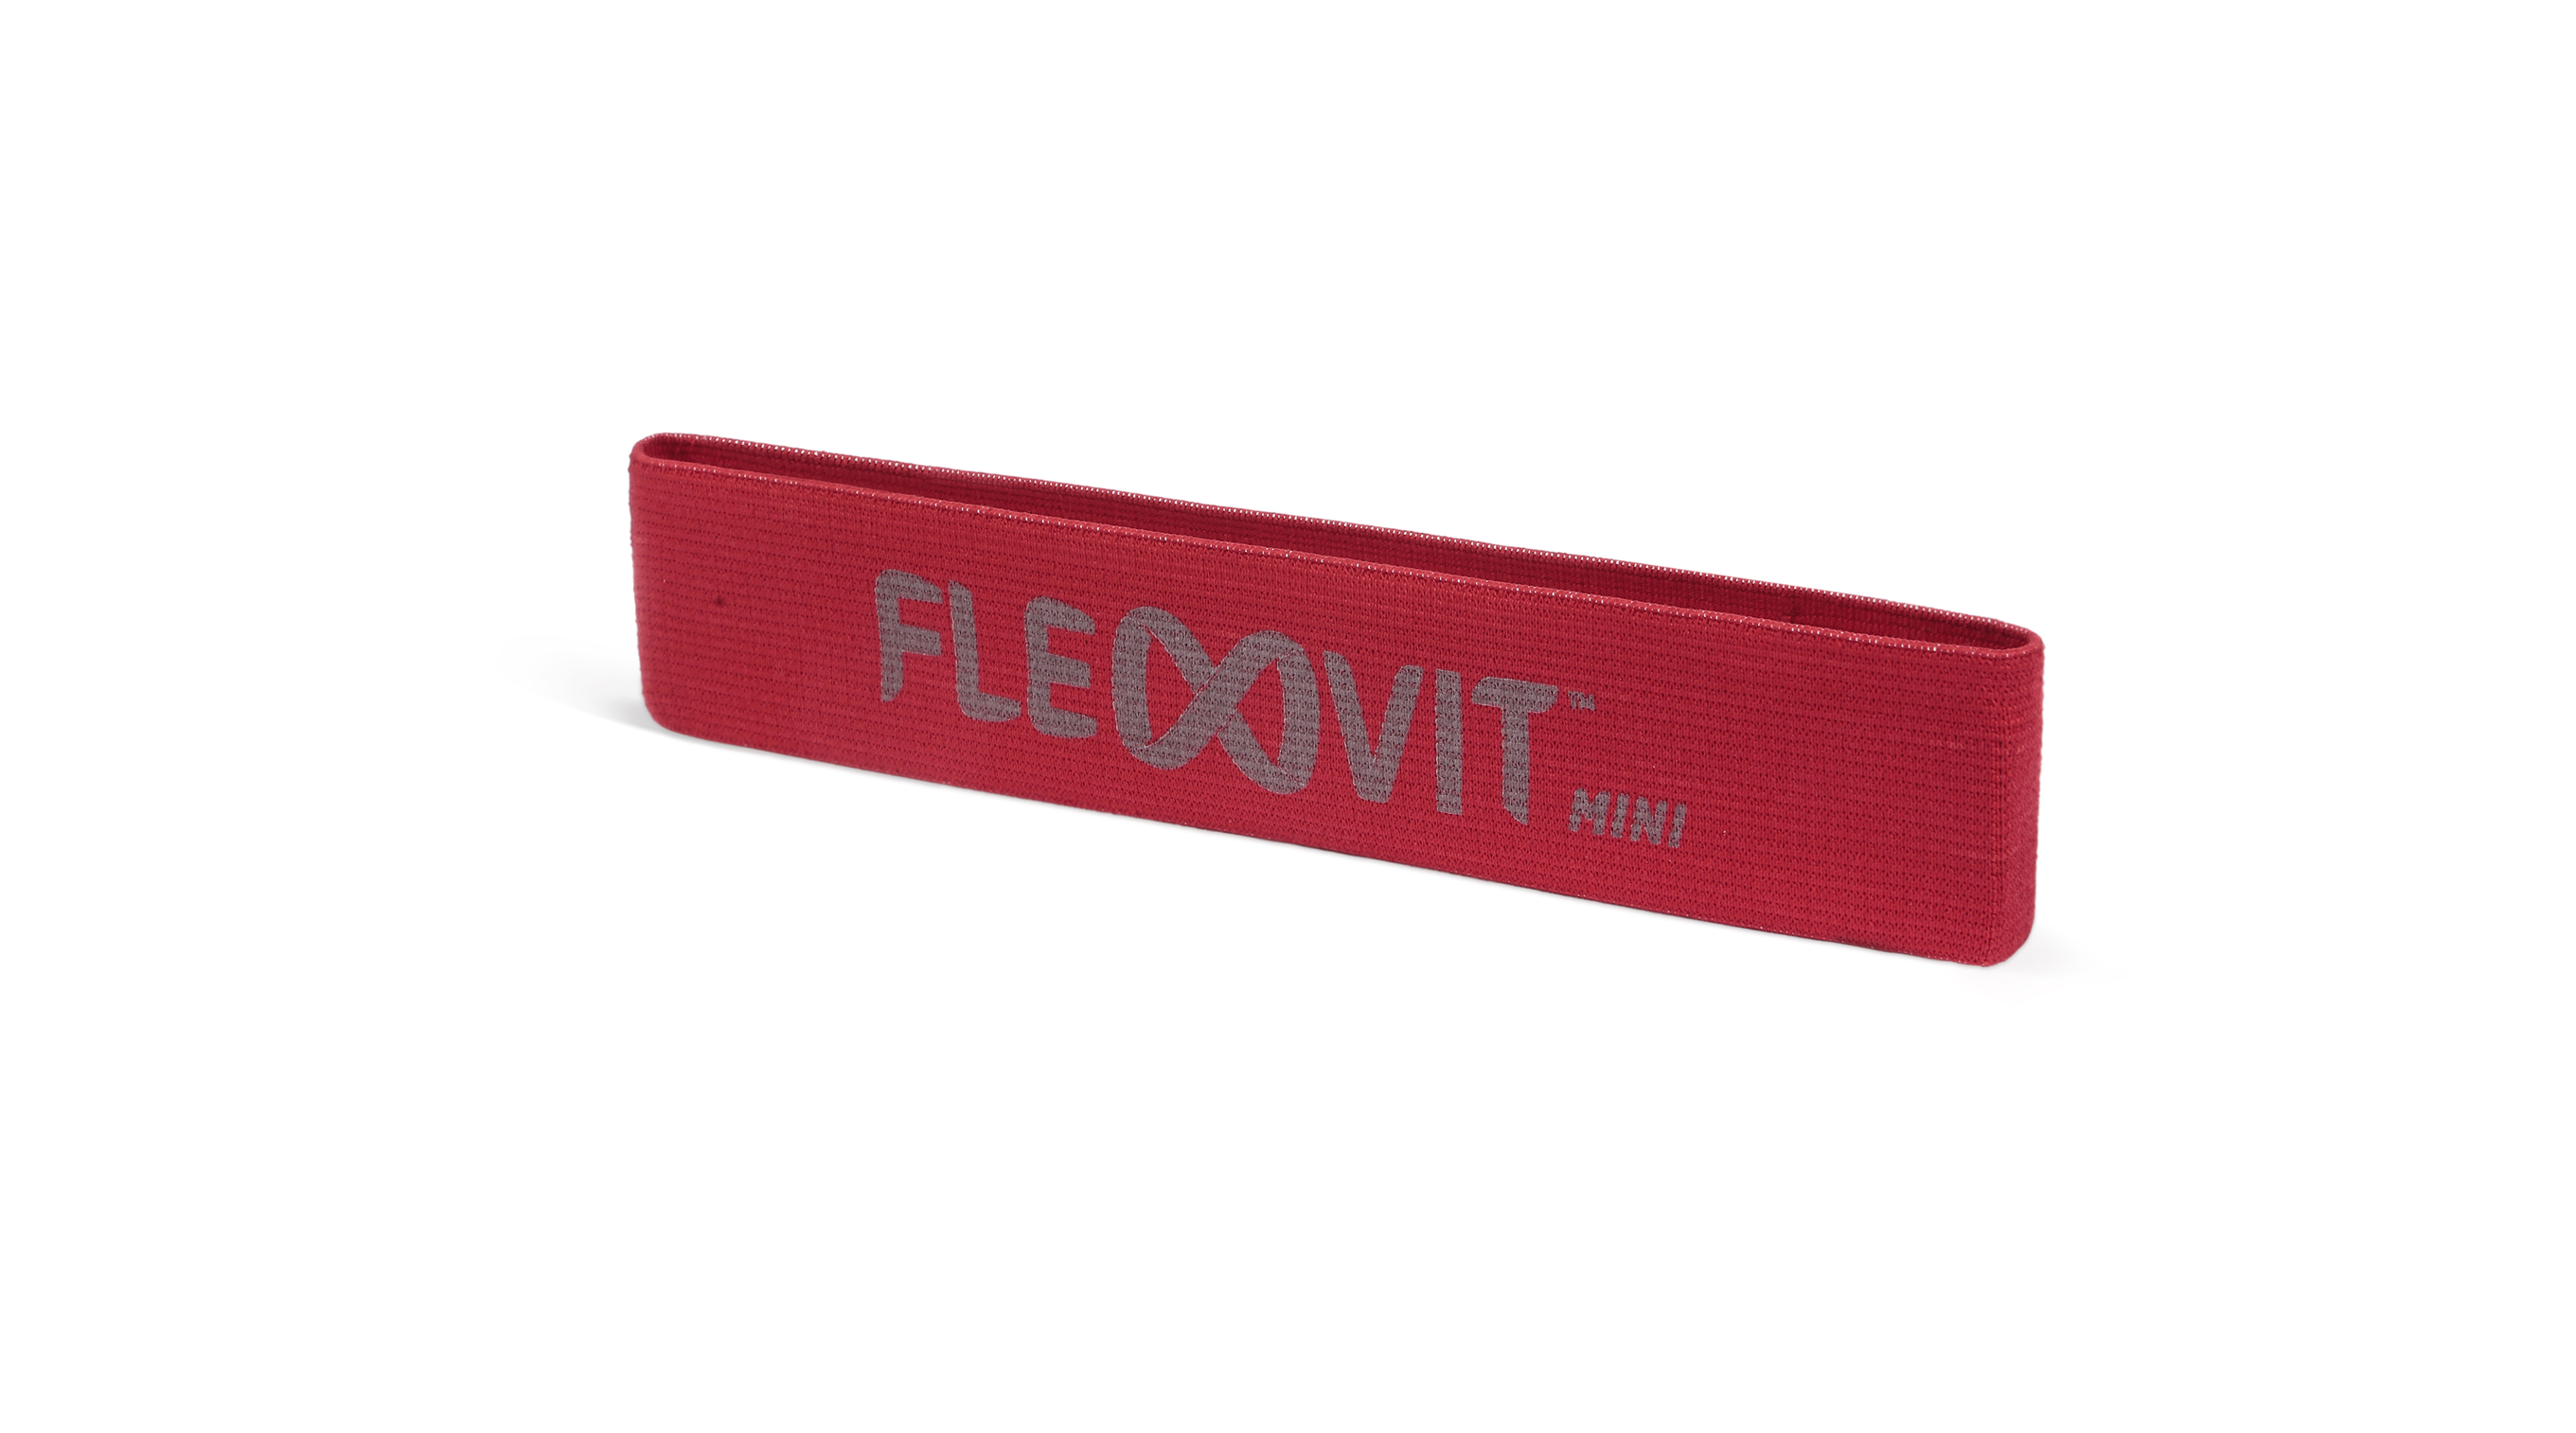 FLEXVIT Mini Band - 10er Set prehab rot